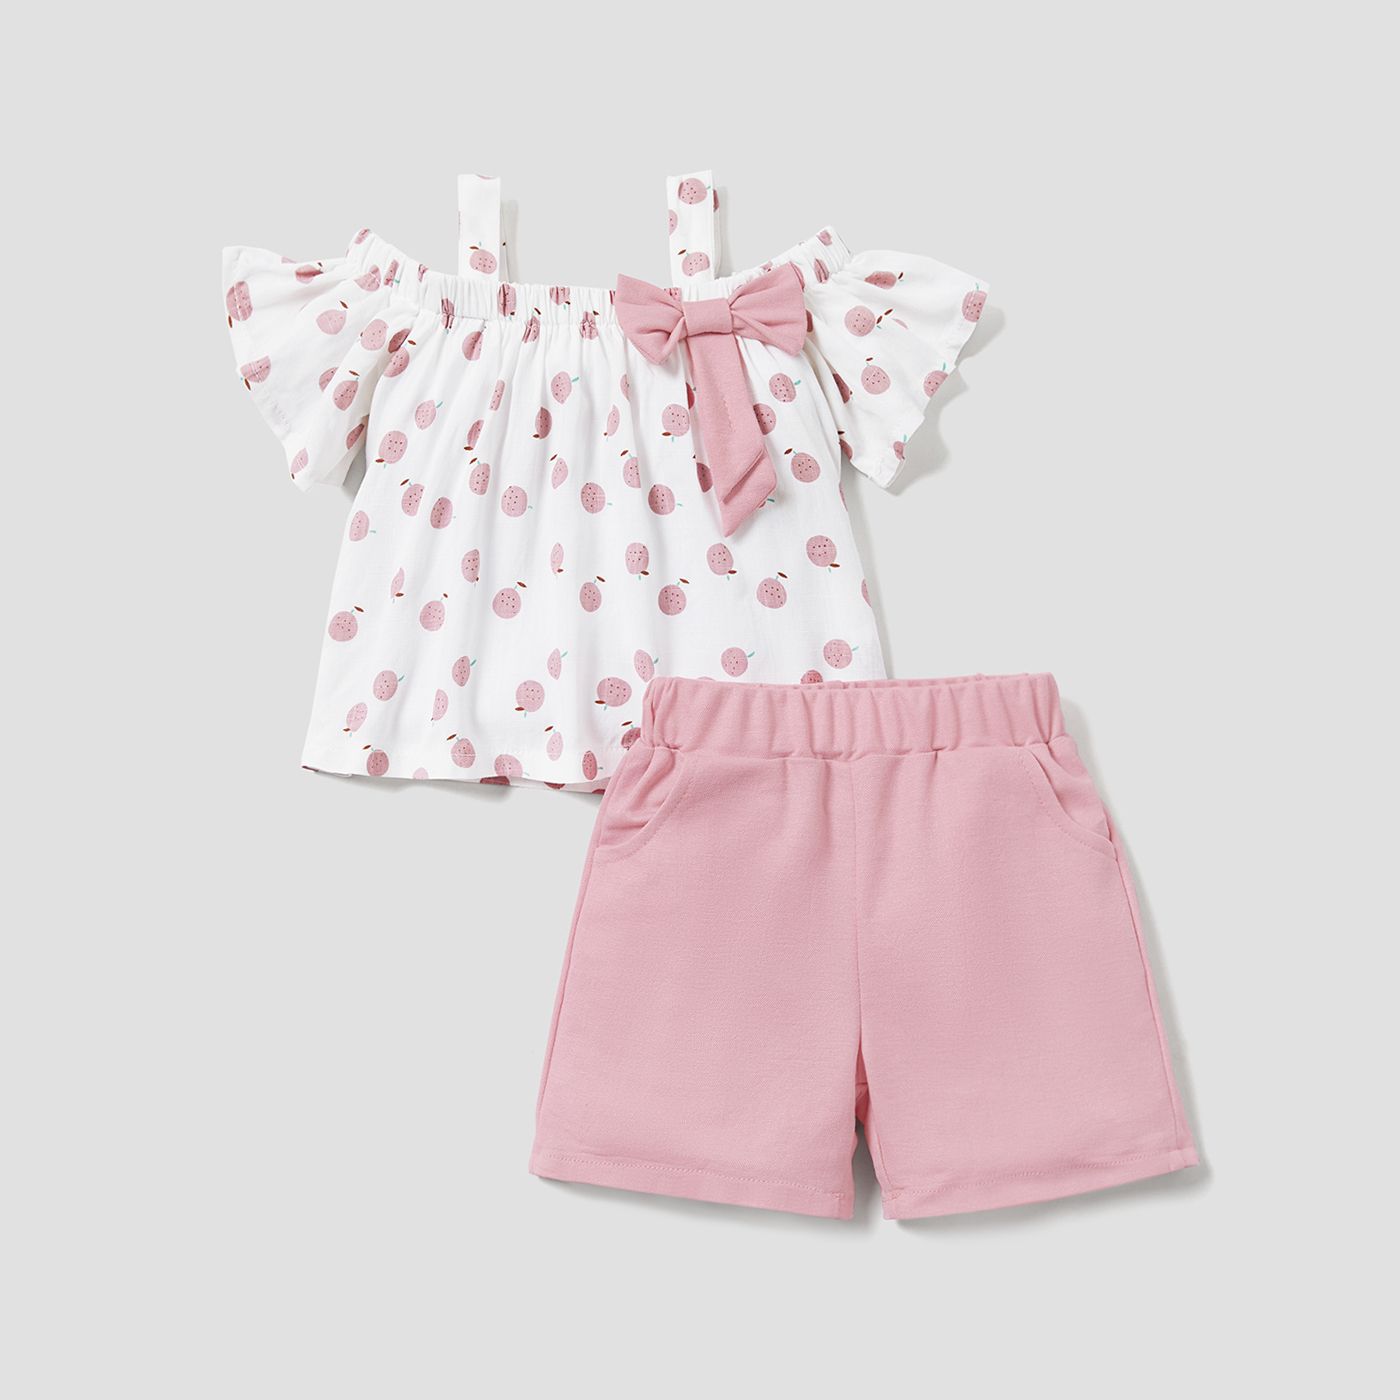 2-piece Toddler Girls Fruit Print Bow Top And Shorts Set